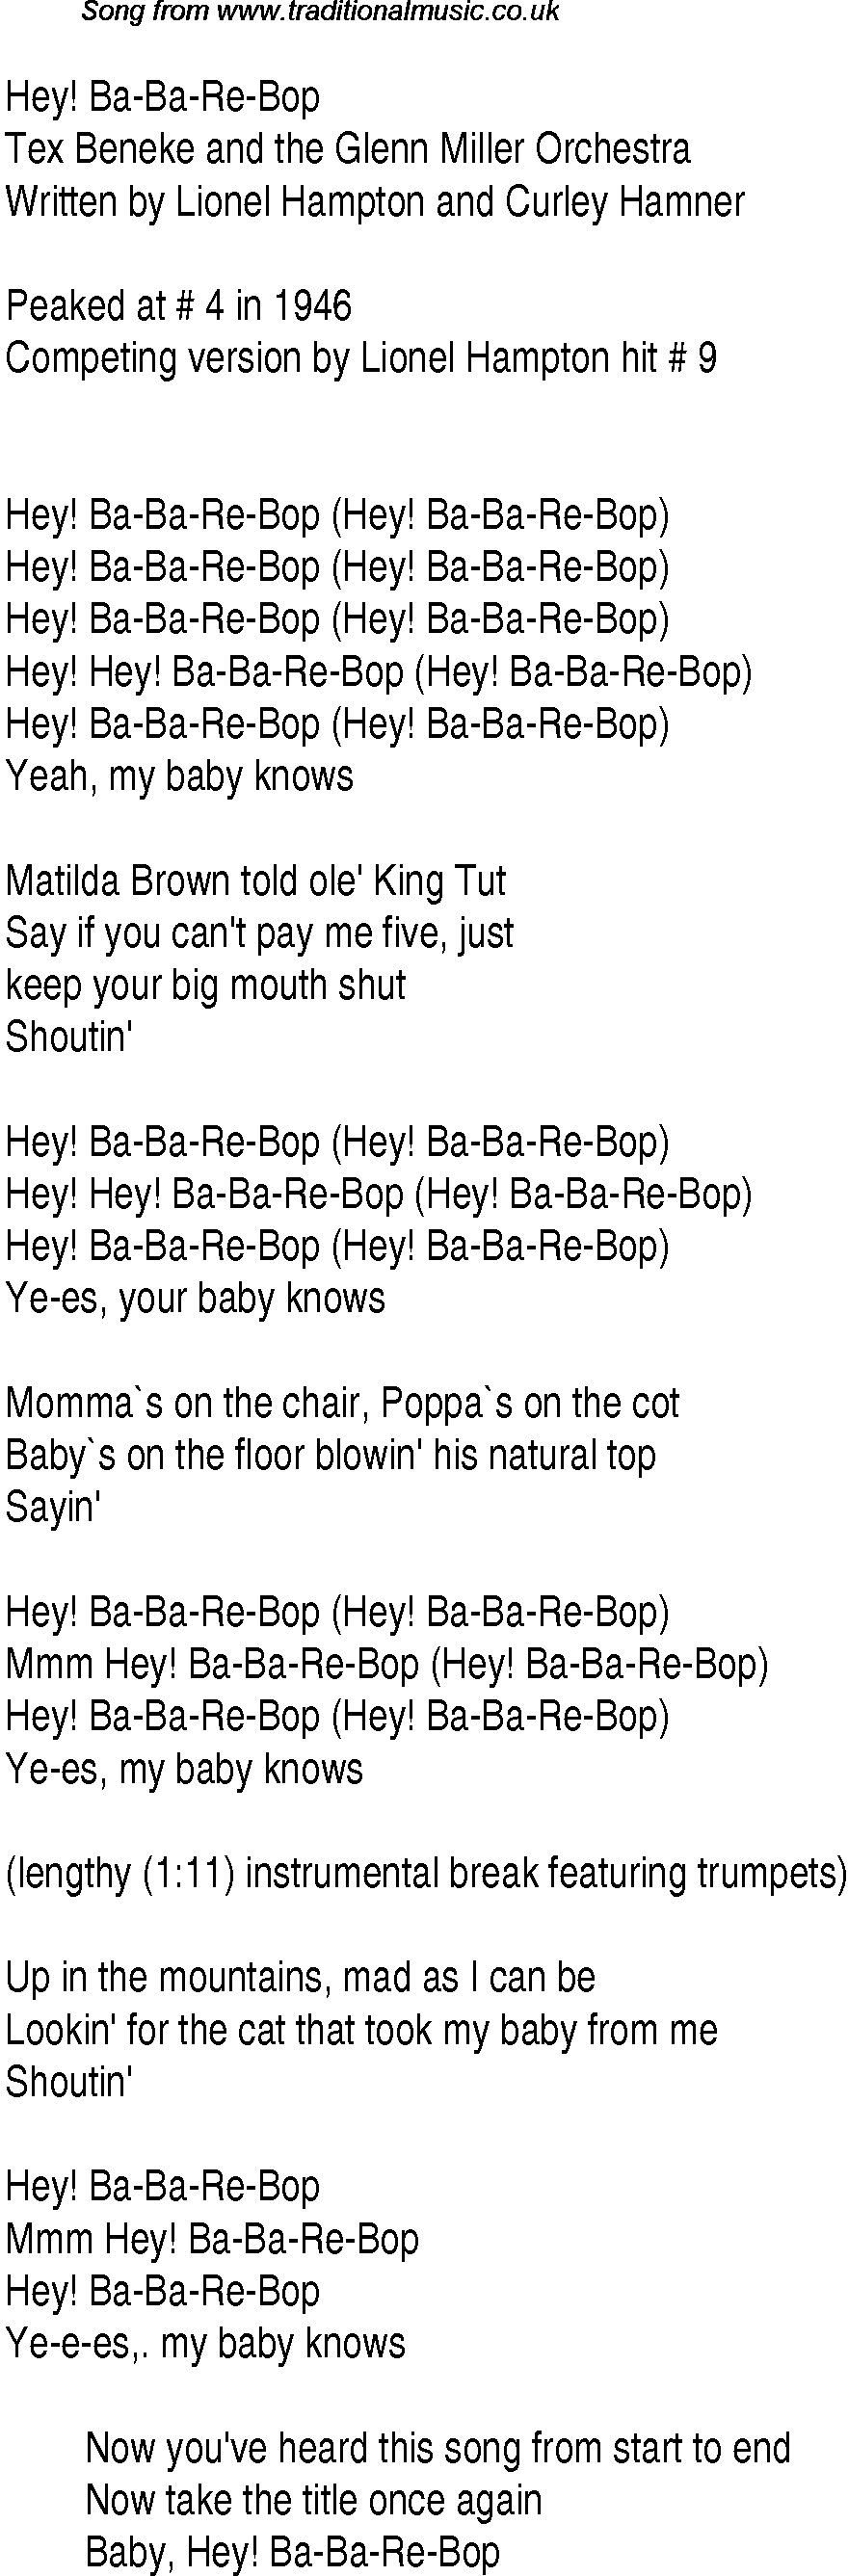 Music charts top songs 1946 - lyrics for Hey Ba Ba Re Bop